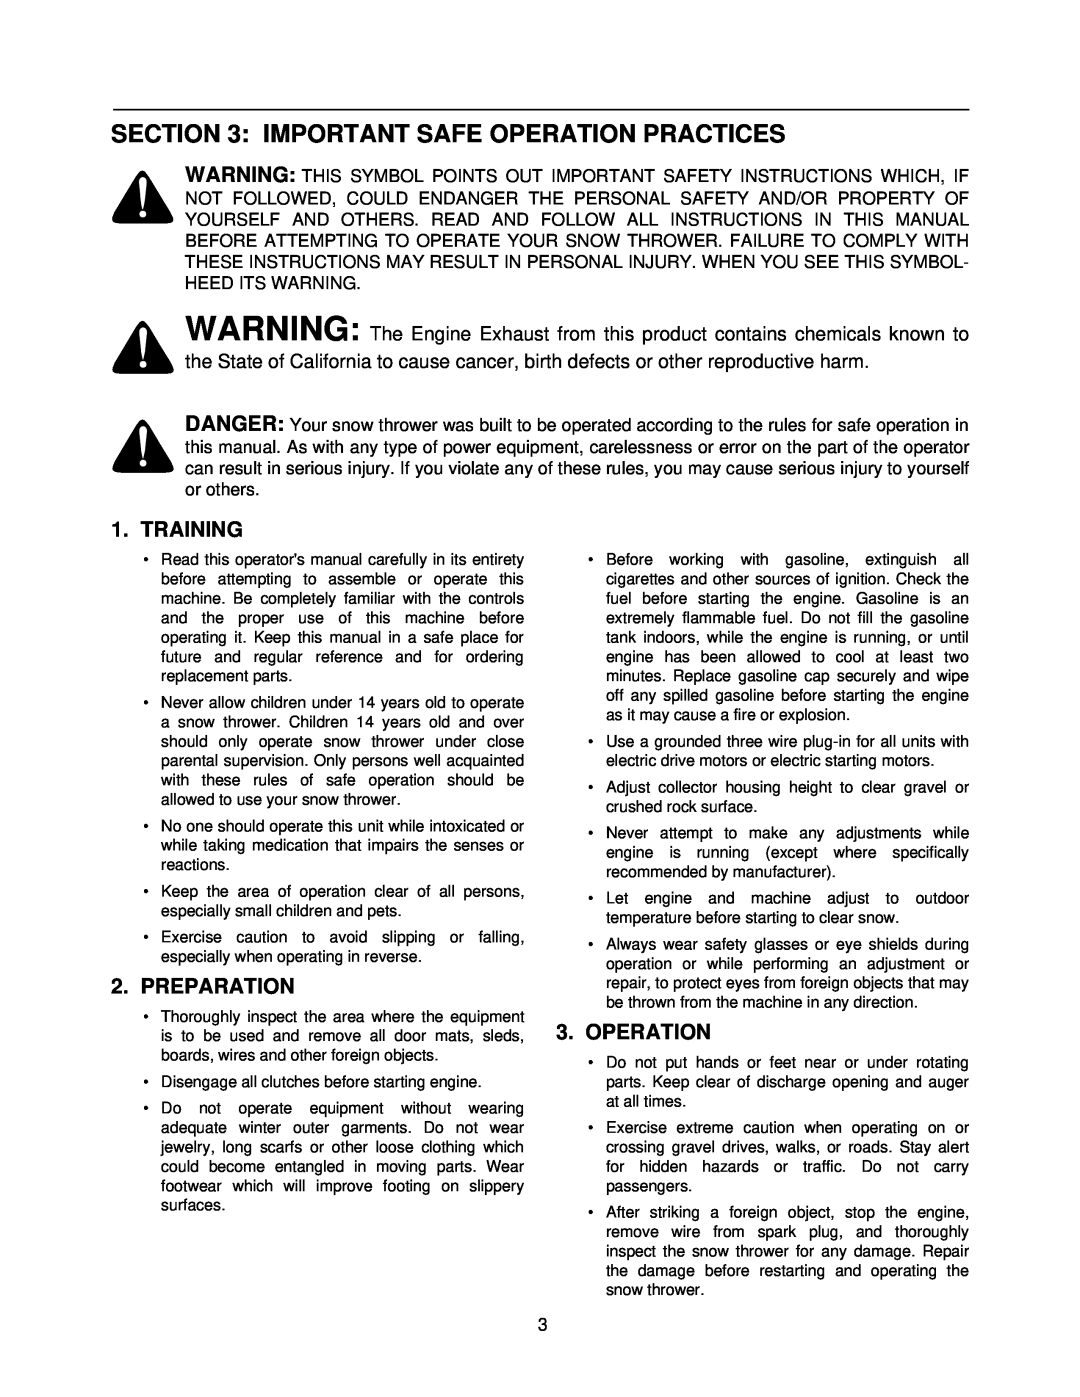 Cub Cadet 1333 SWE manual Important Safe Operation Practices, Training, Preparation 